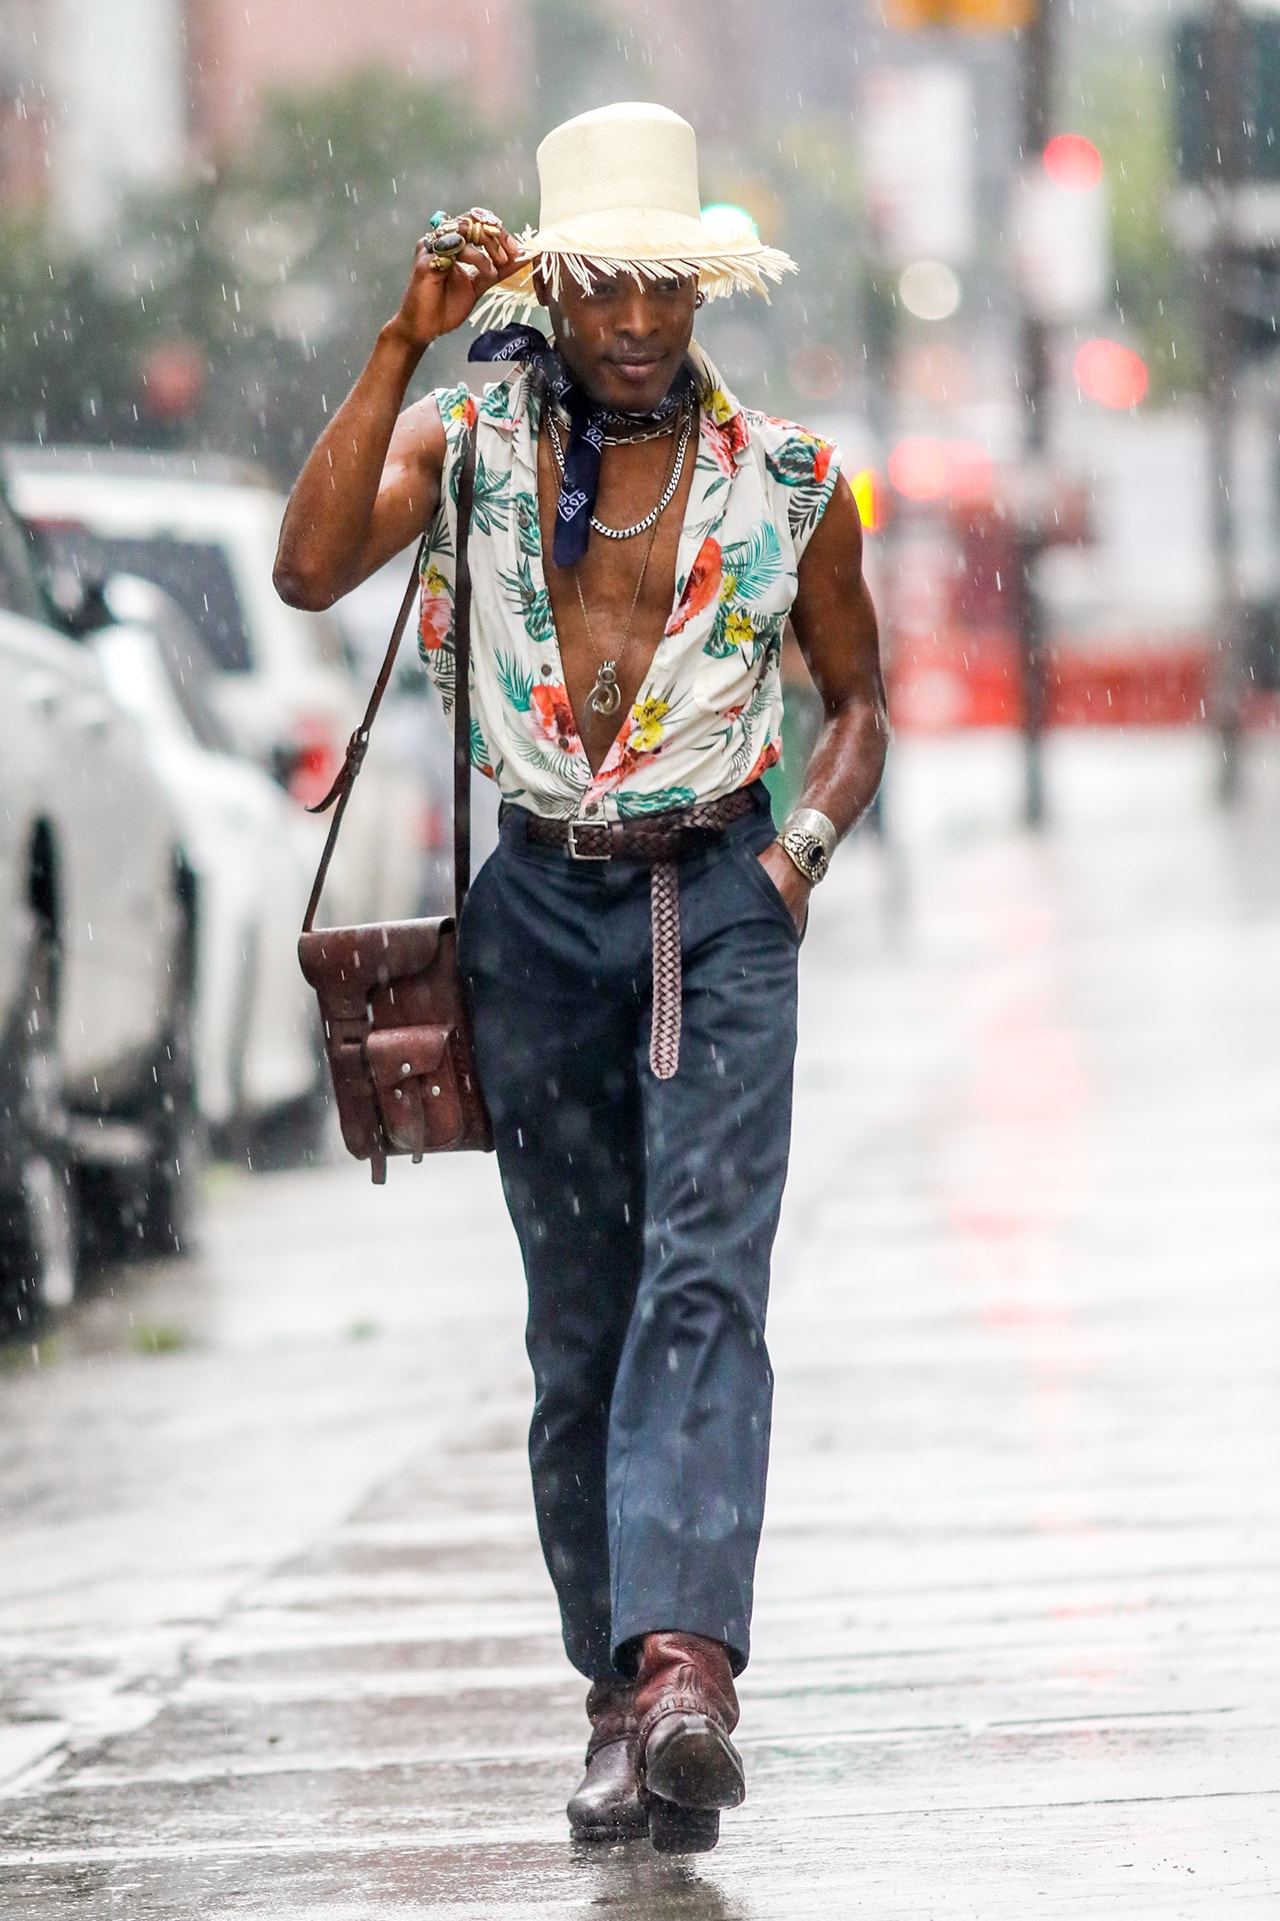 watchingnewyork photographer Johnny Cirillo New York City Street Style Fashion Paparazzi Candid